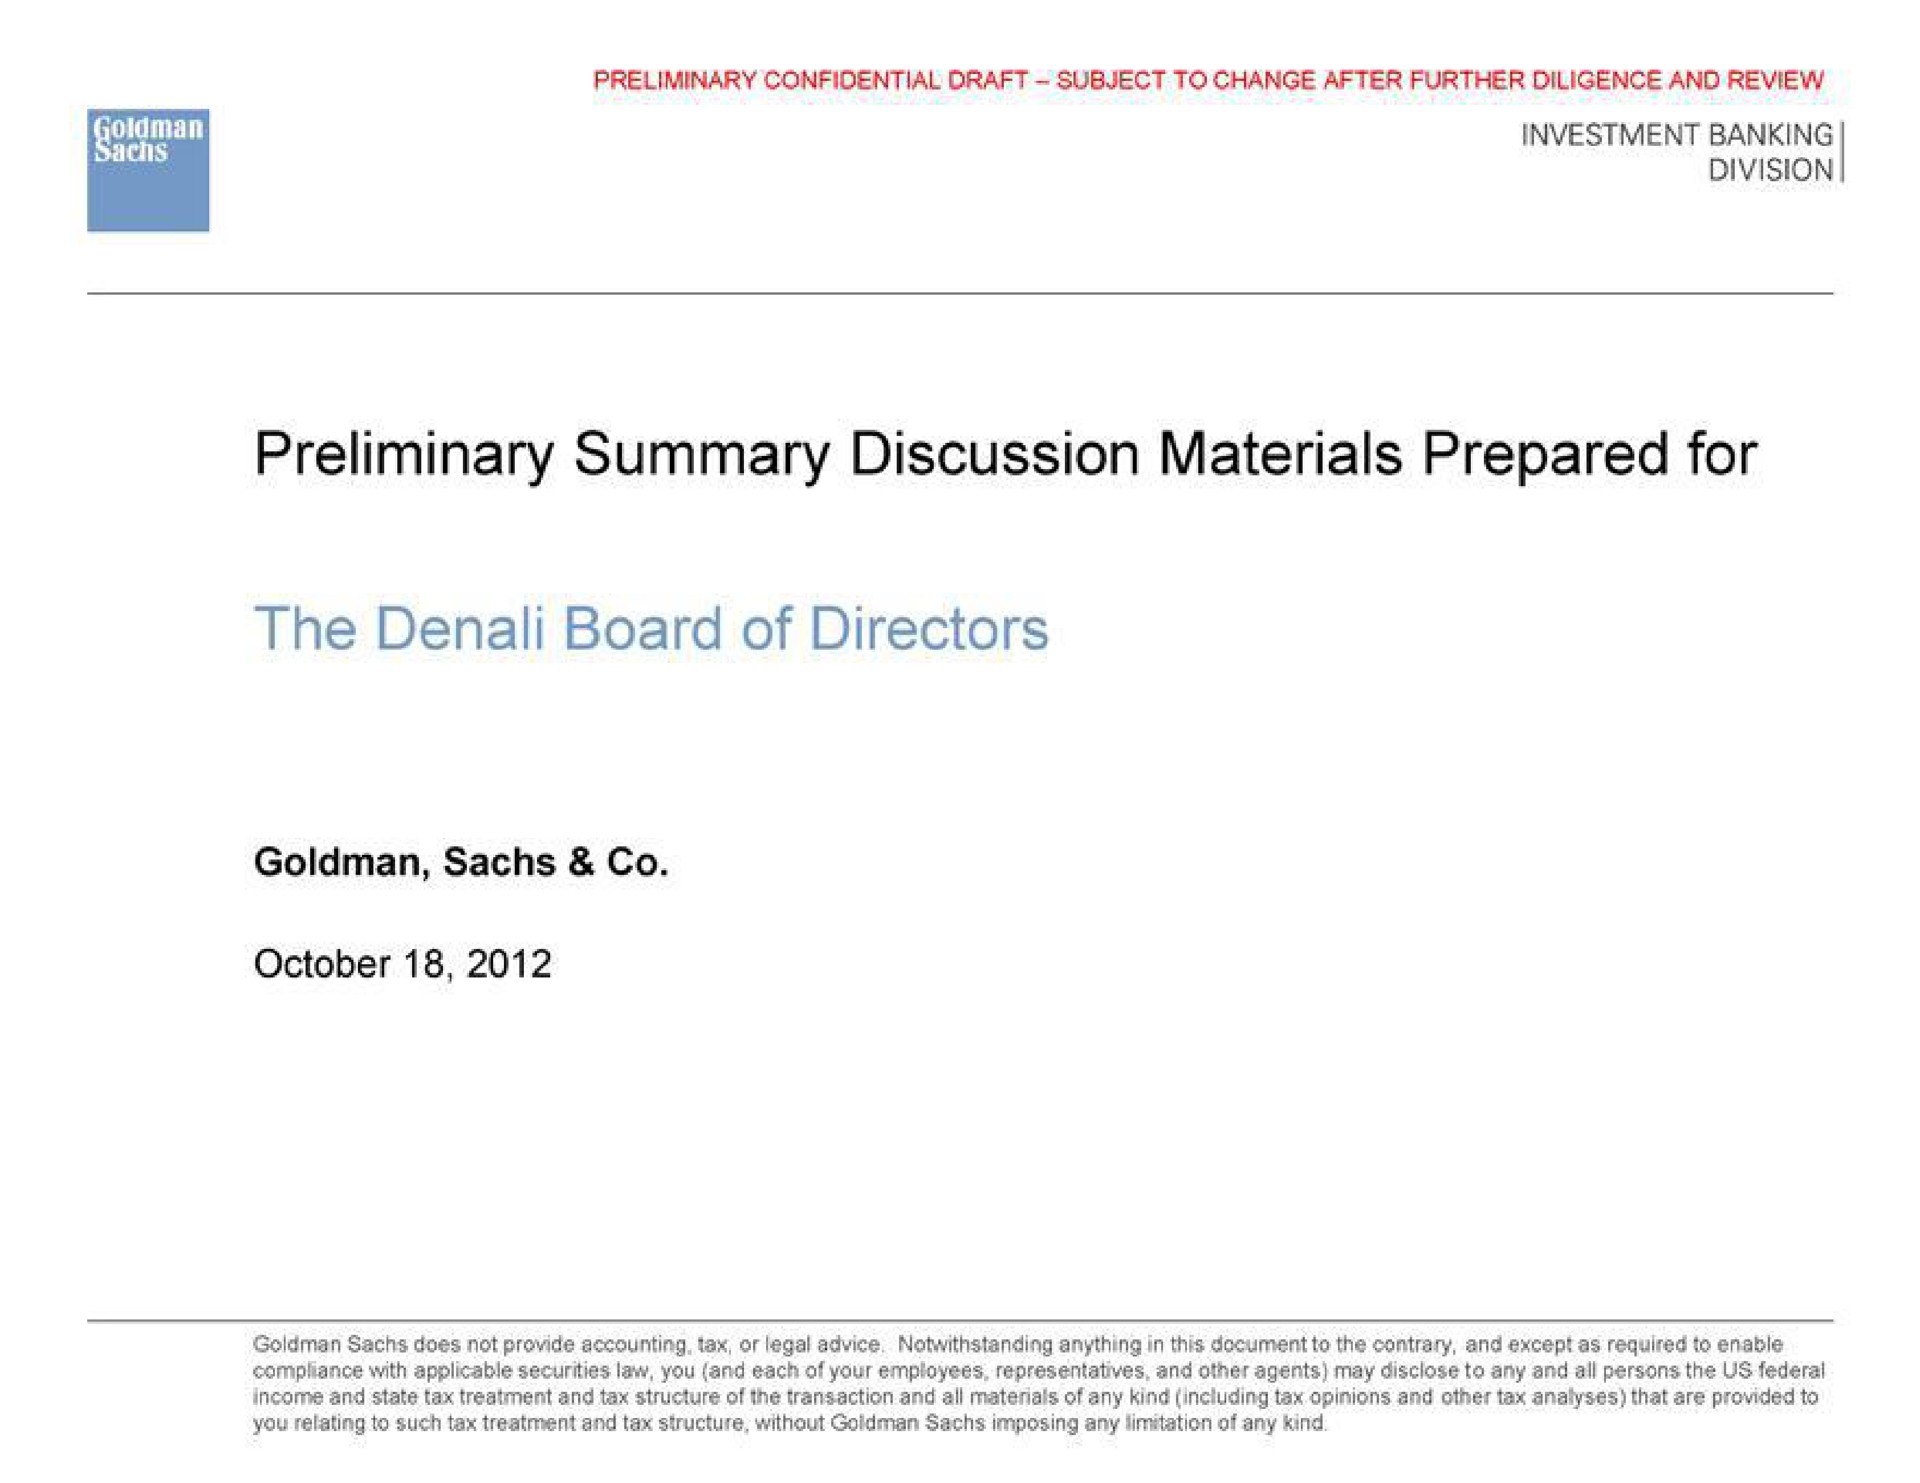 preliminary summary discussion materials prepared for the board of directors | Goldman Sachs